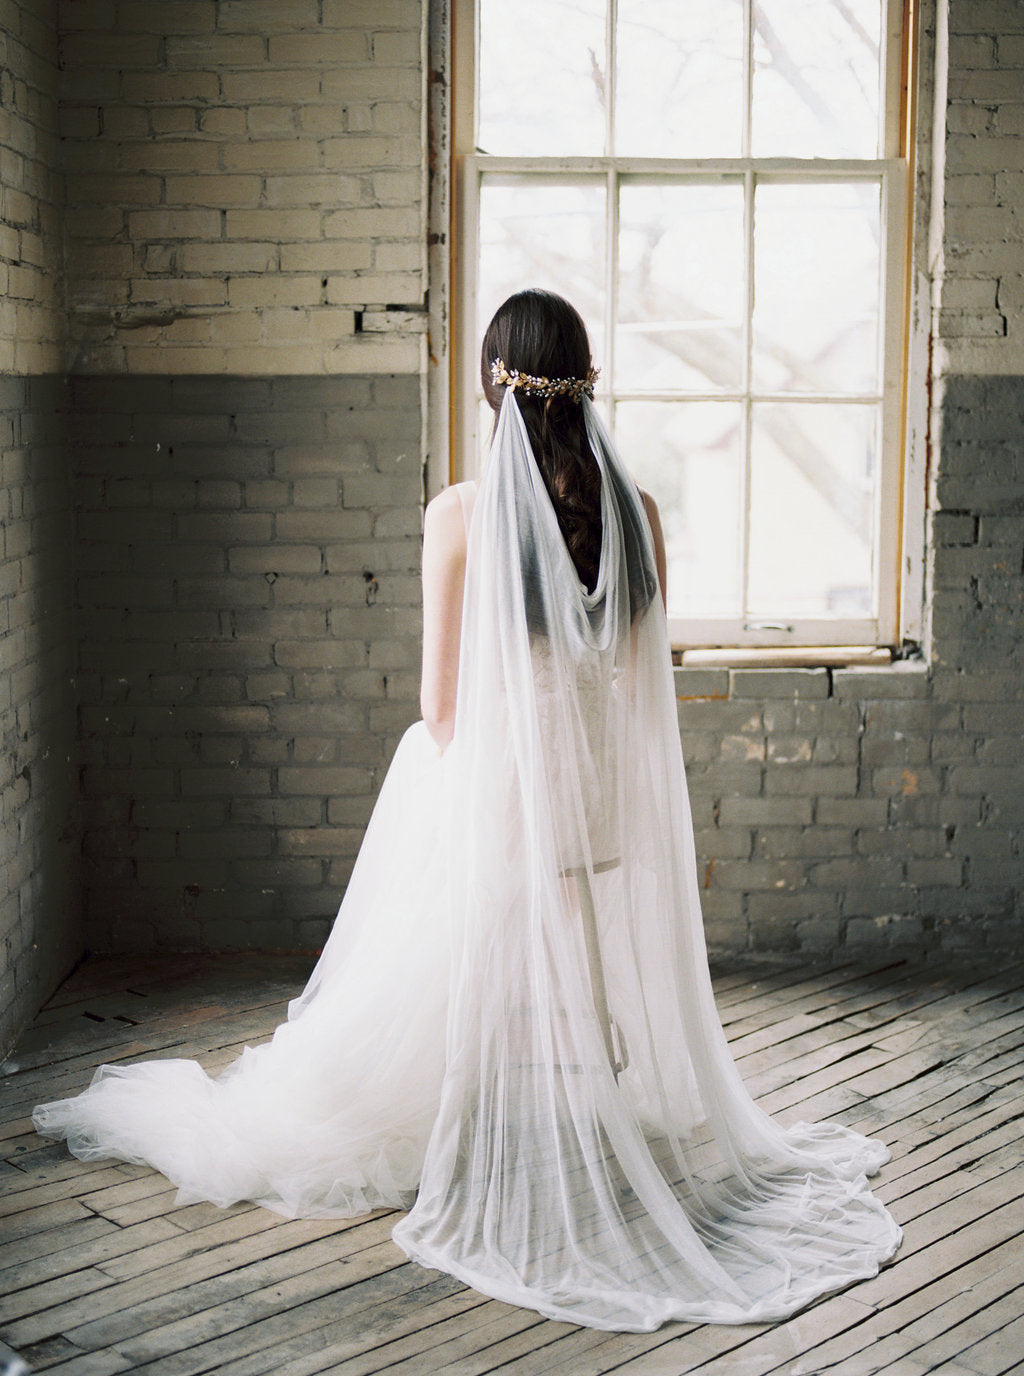 Silk draped wedding veil